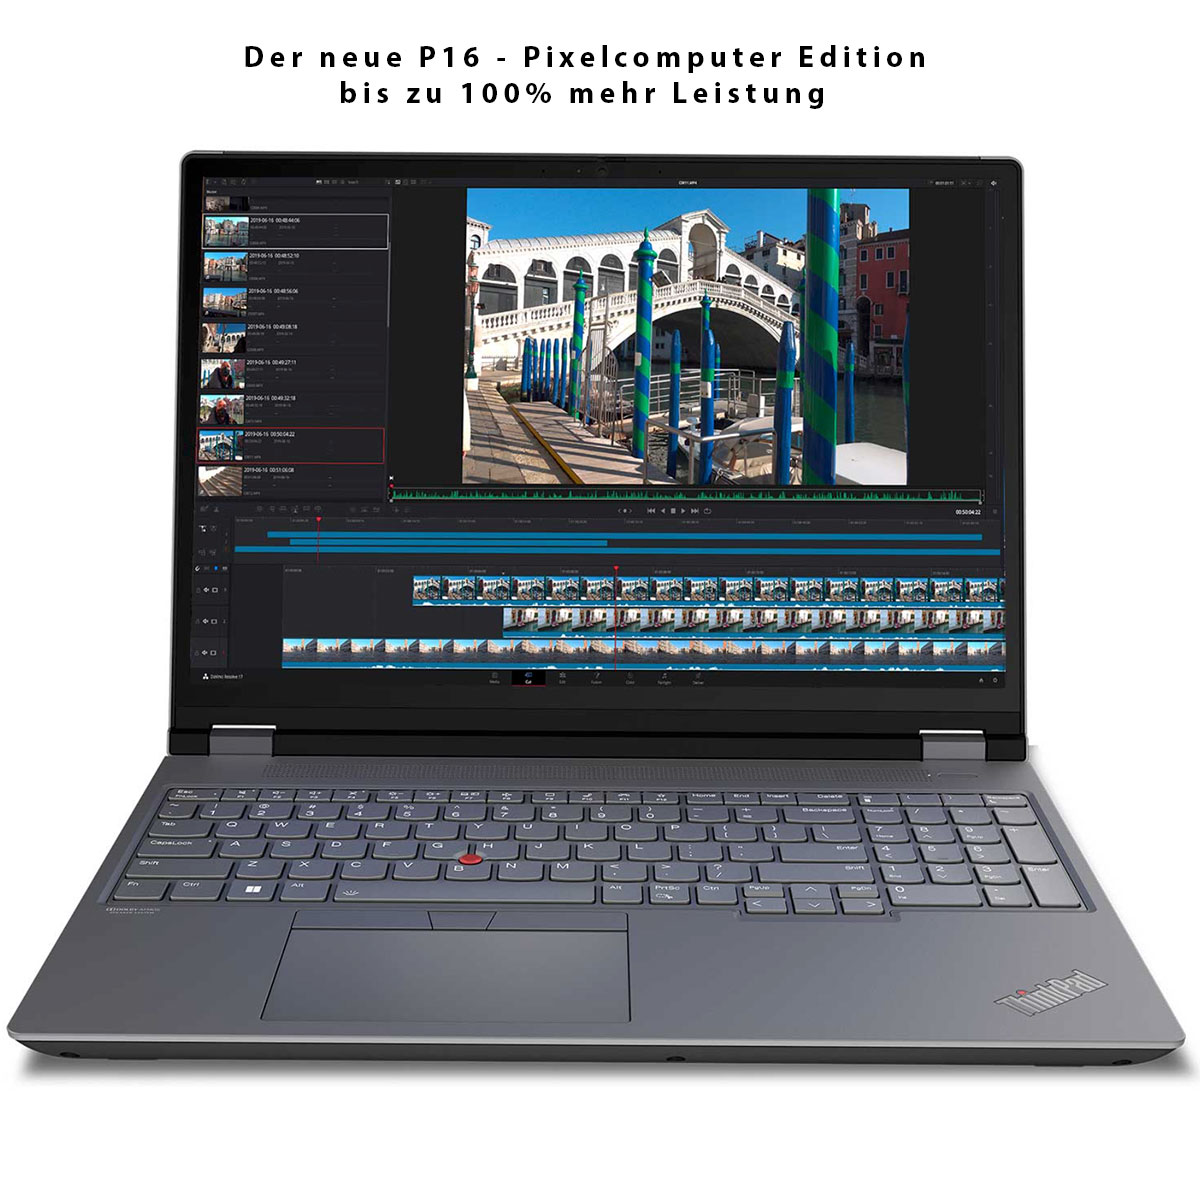 P16 - Pixelcomputer